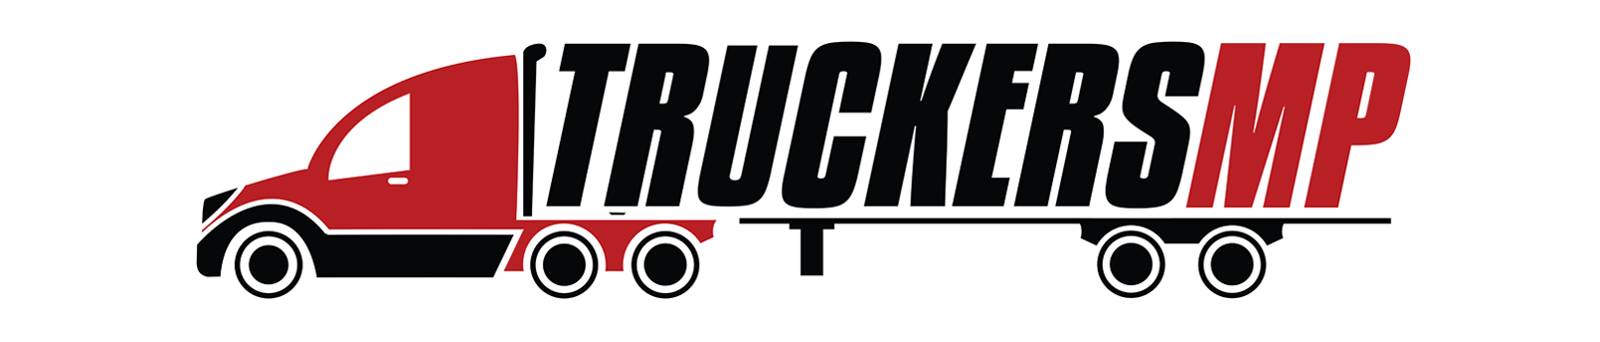 truckersmp-logo-black